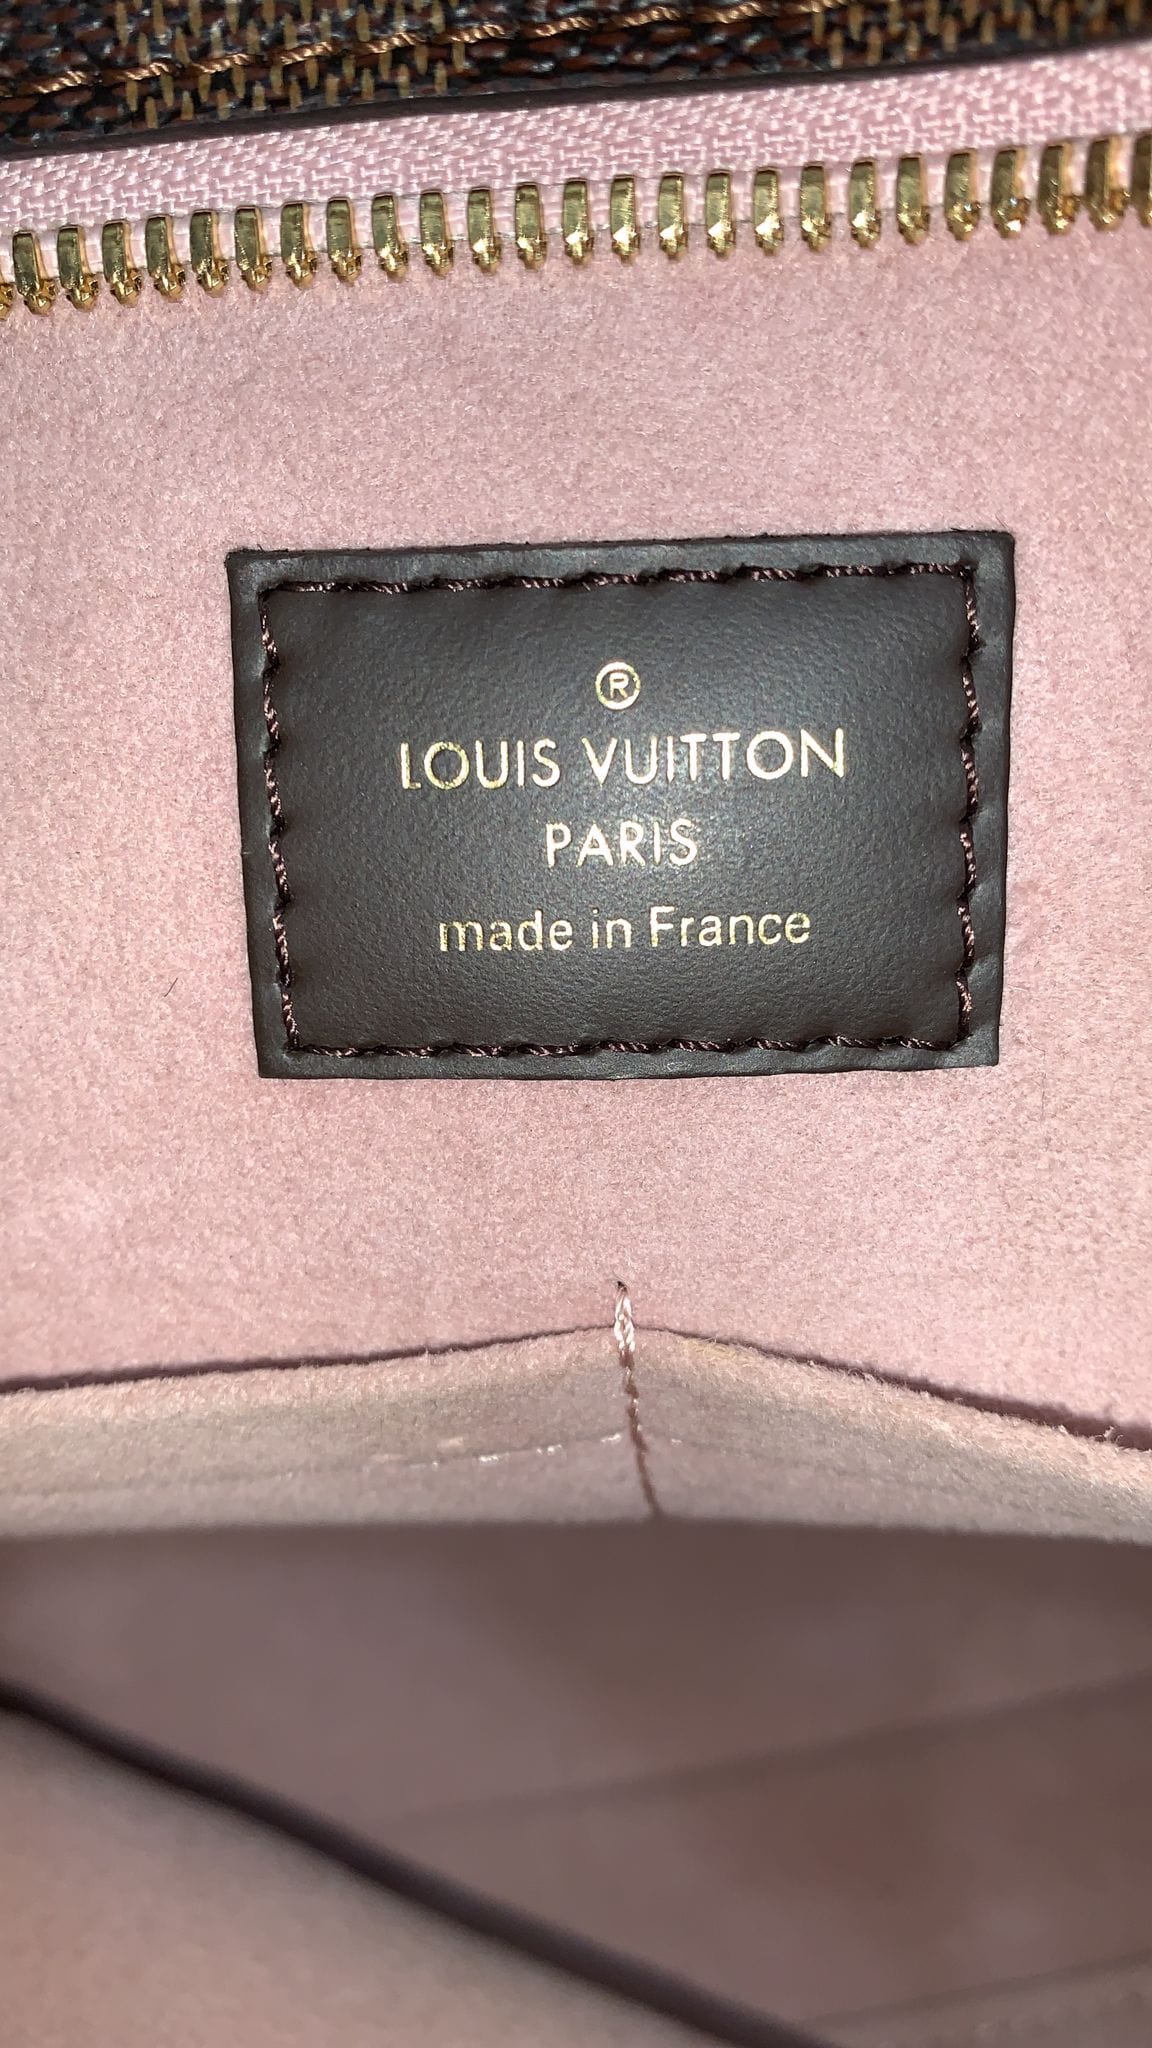 LV Louis Vuitton Jersey Damier Ebene Pink Magnolia Tote Bag